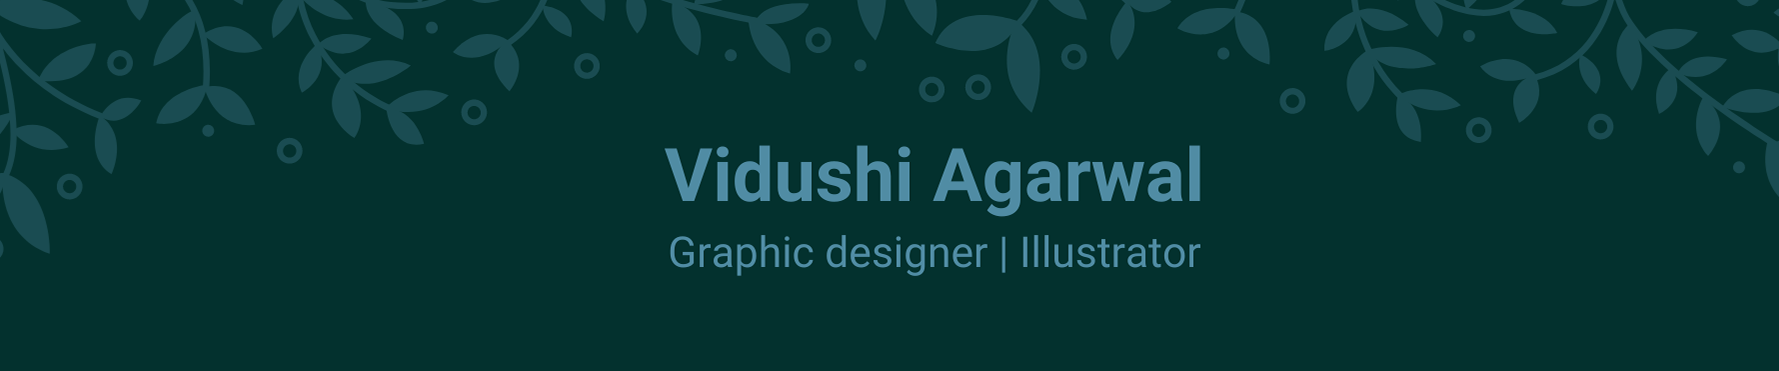 Banner de perfil de Vidushi Agarwal